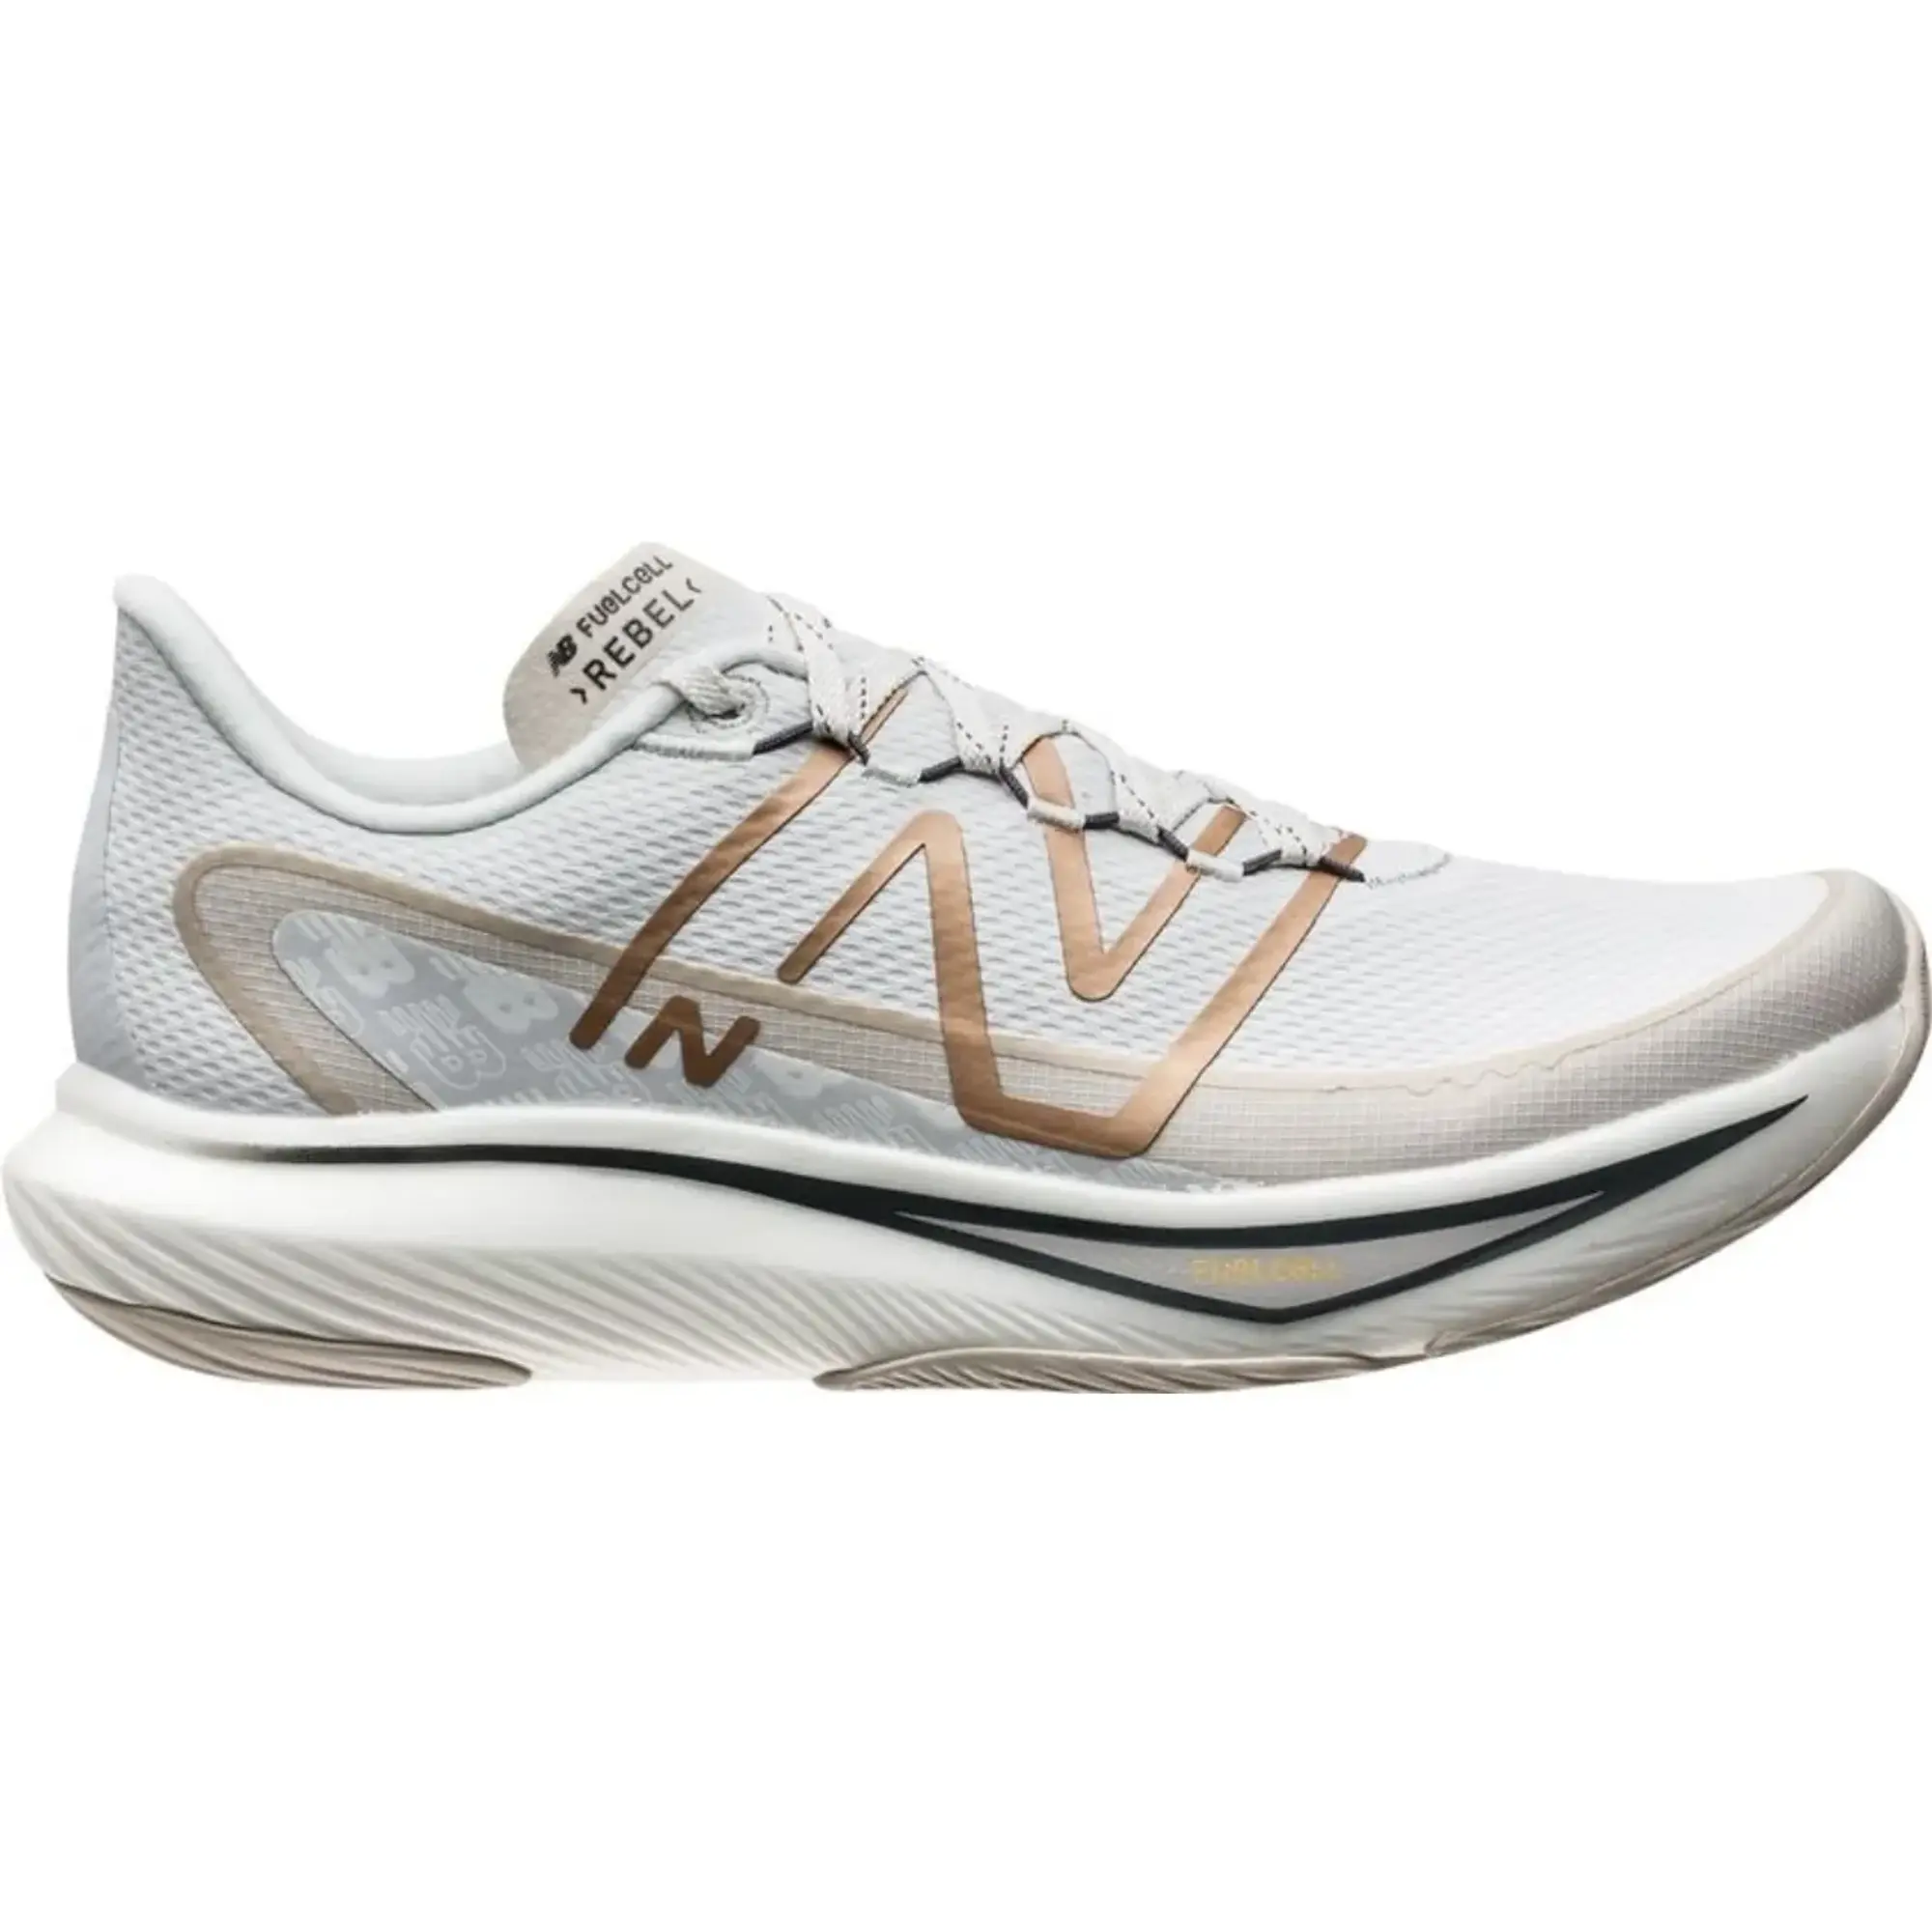 New Balance Running Shoe Fuelcell Rebel V3 - White